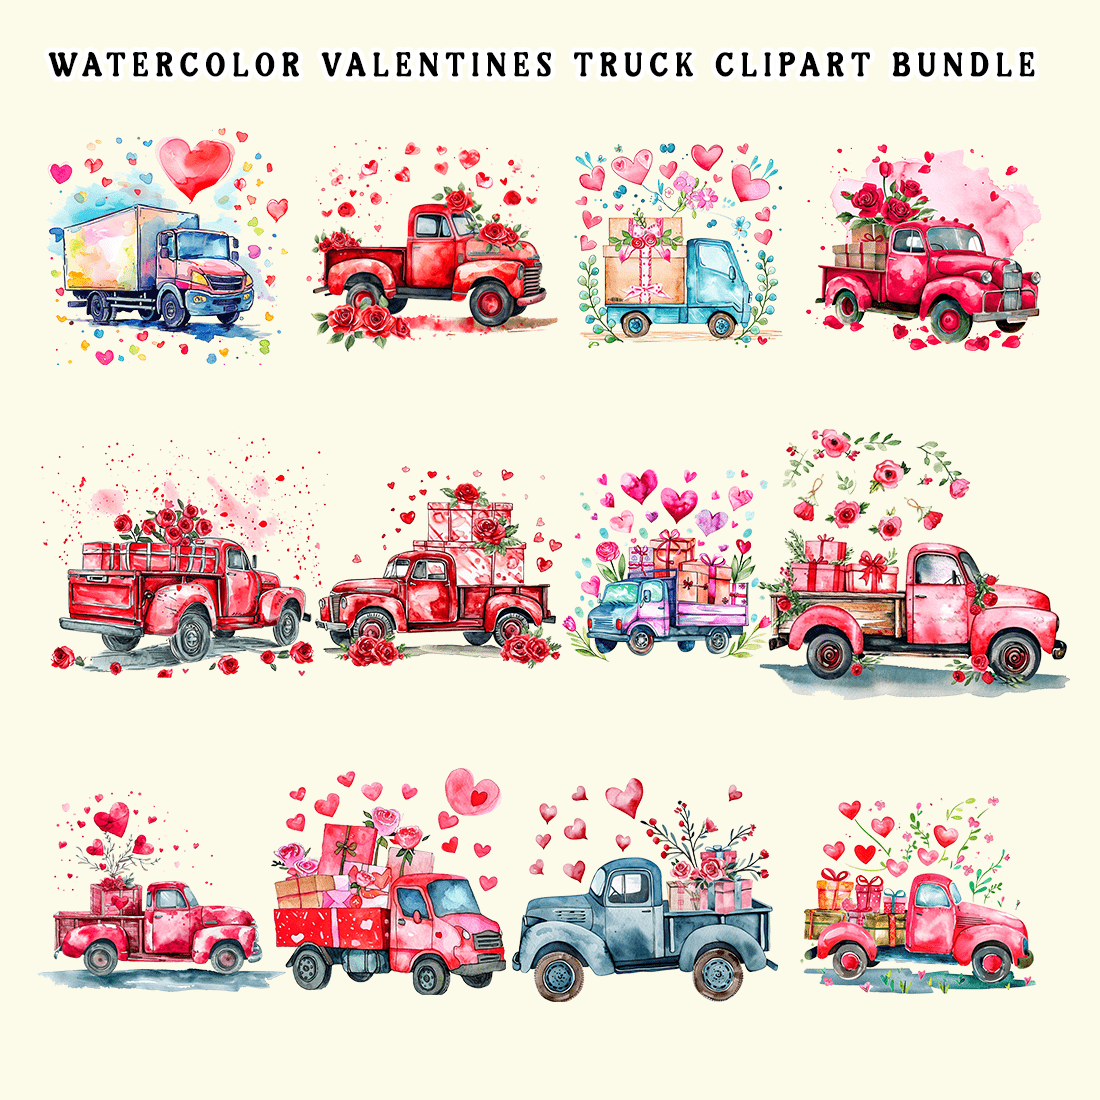 Watercolor Valentines Truck Clipart Bundle preview image.